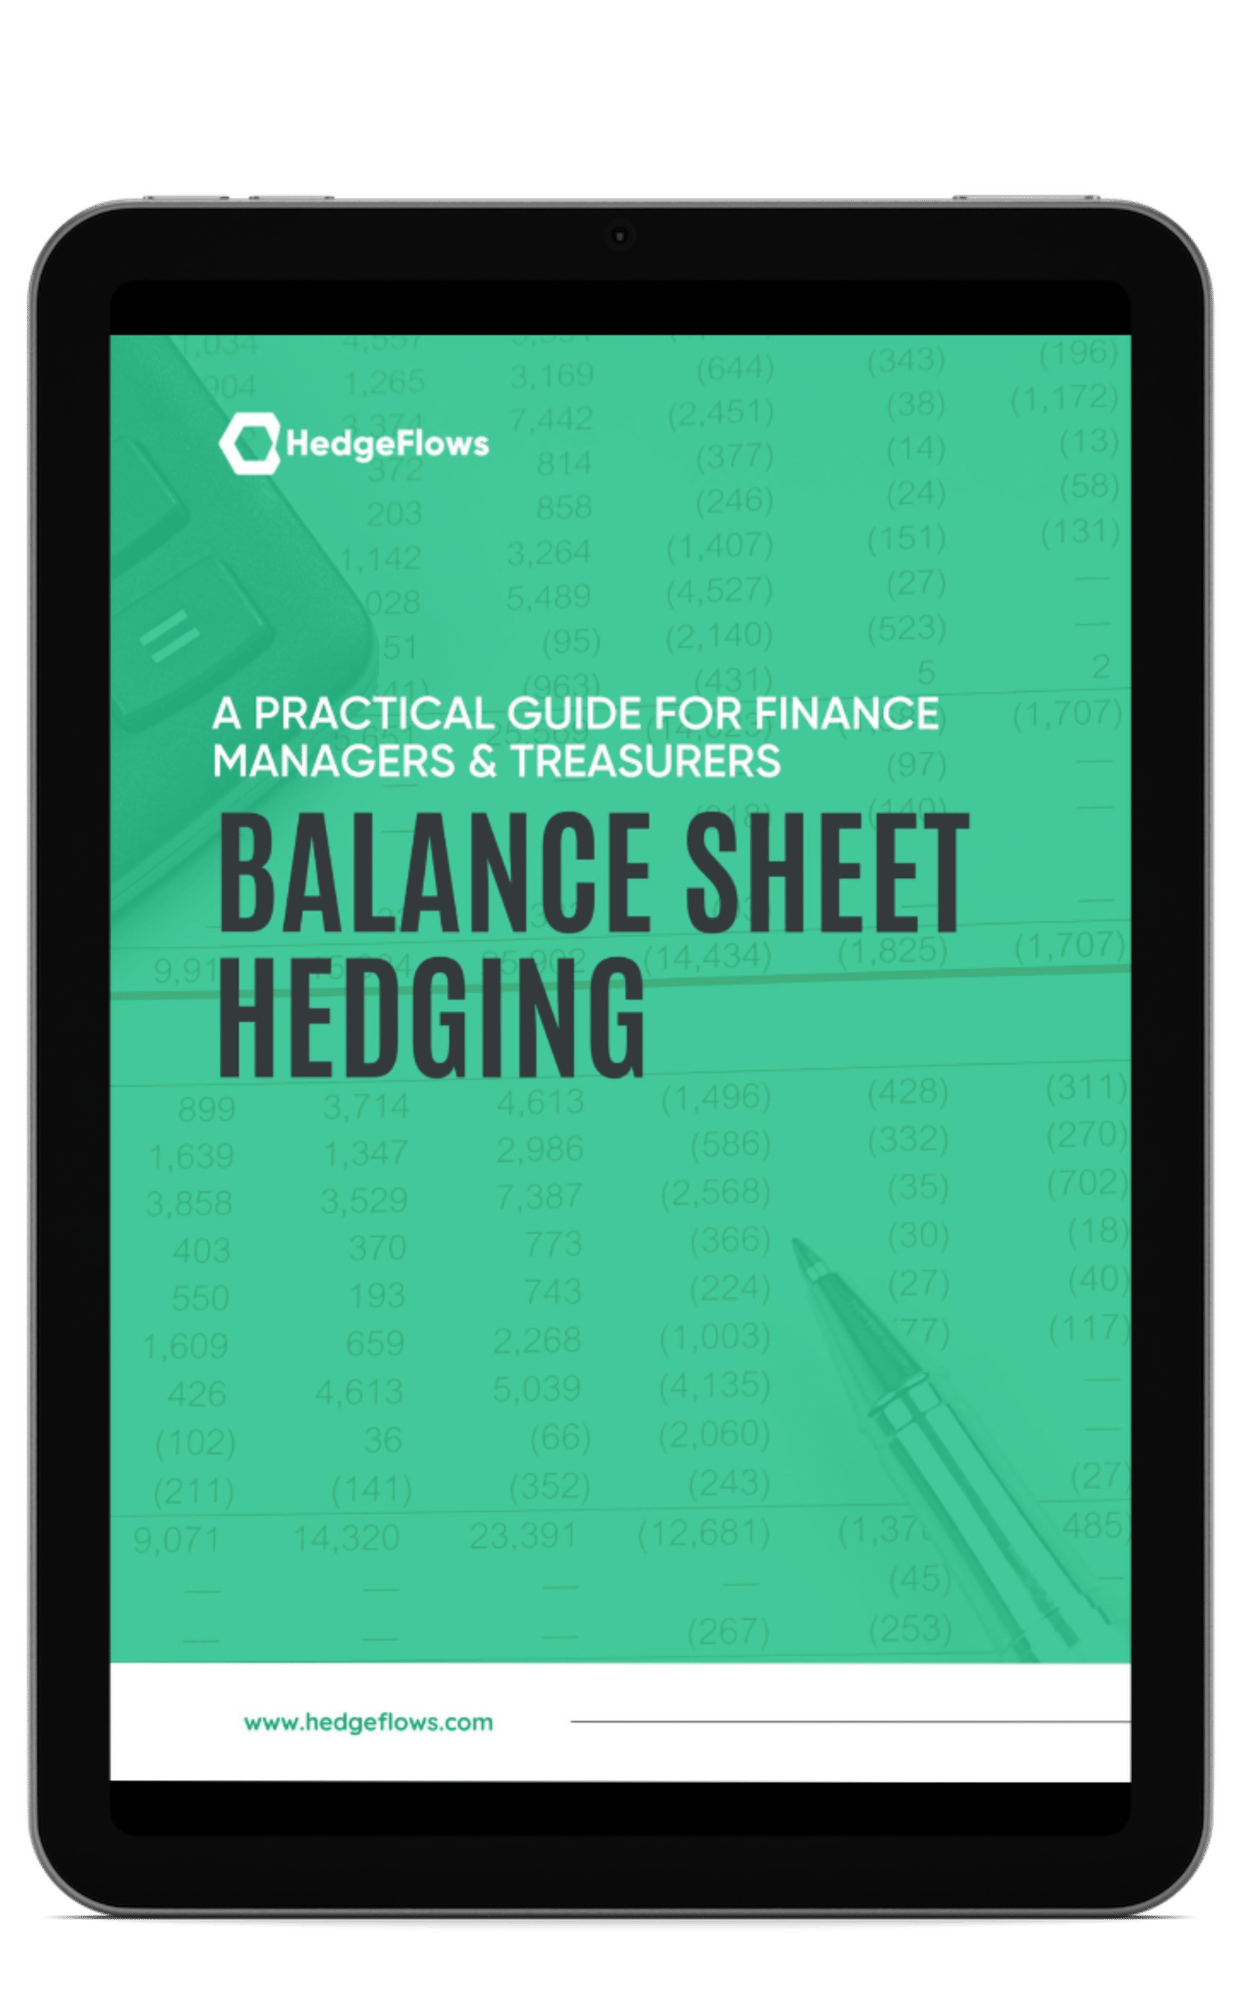 Balance sheet hedging guide